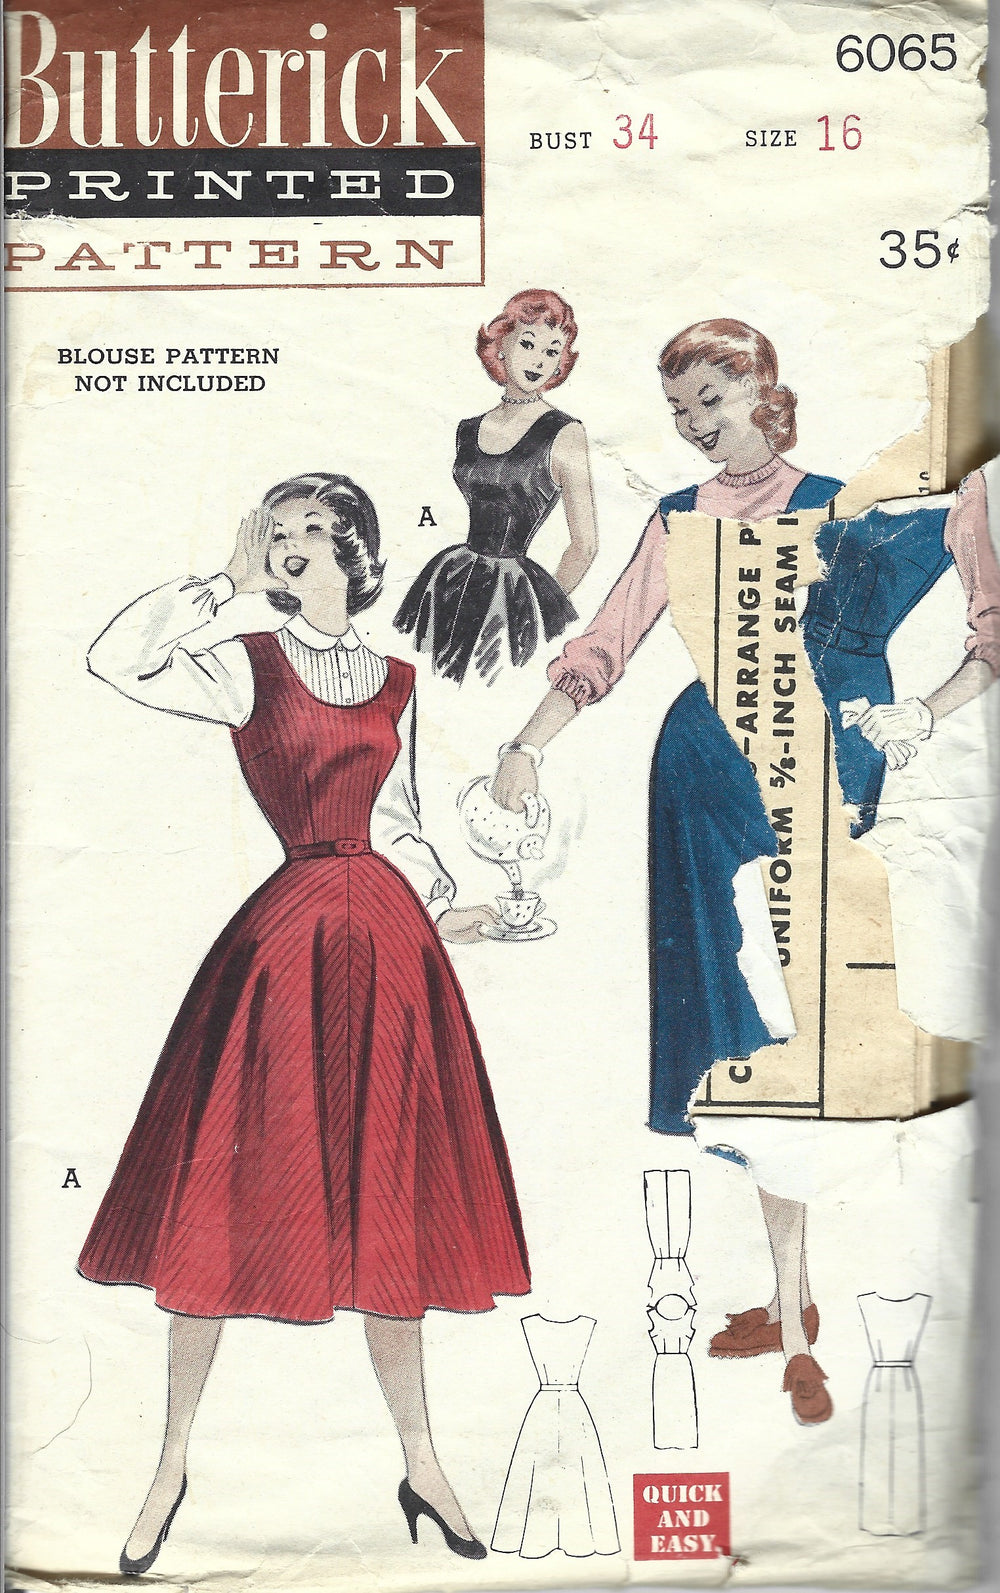 Butterick 6065 jumper dress vintage pattern